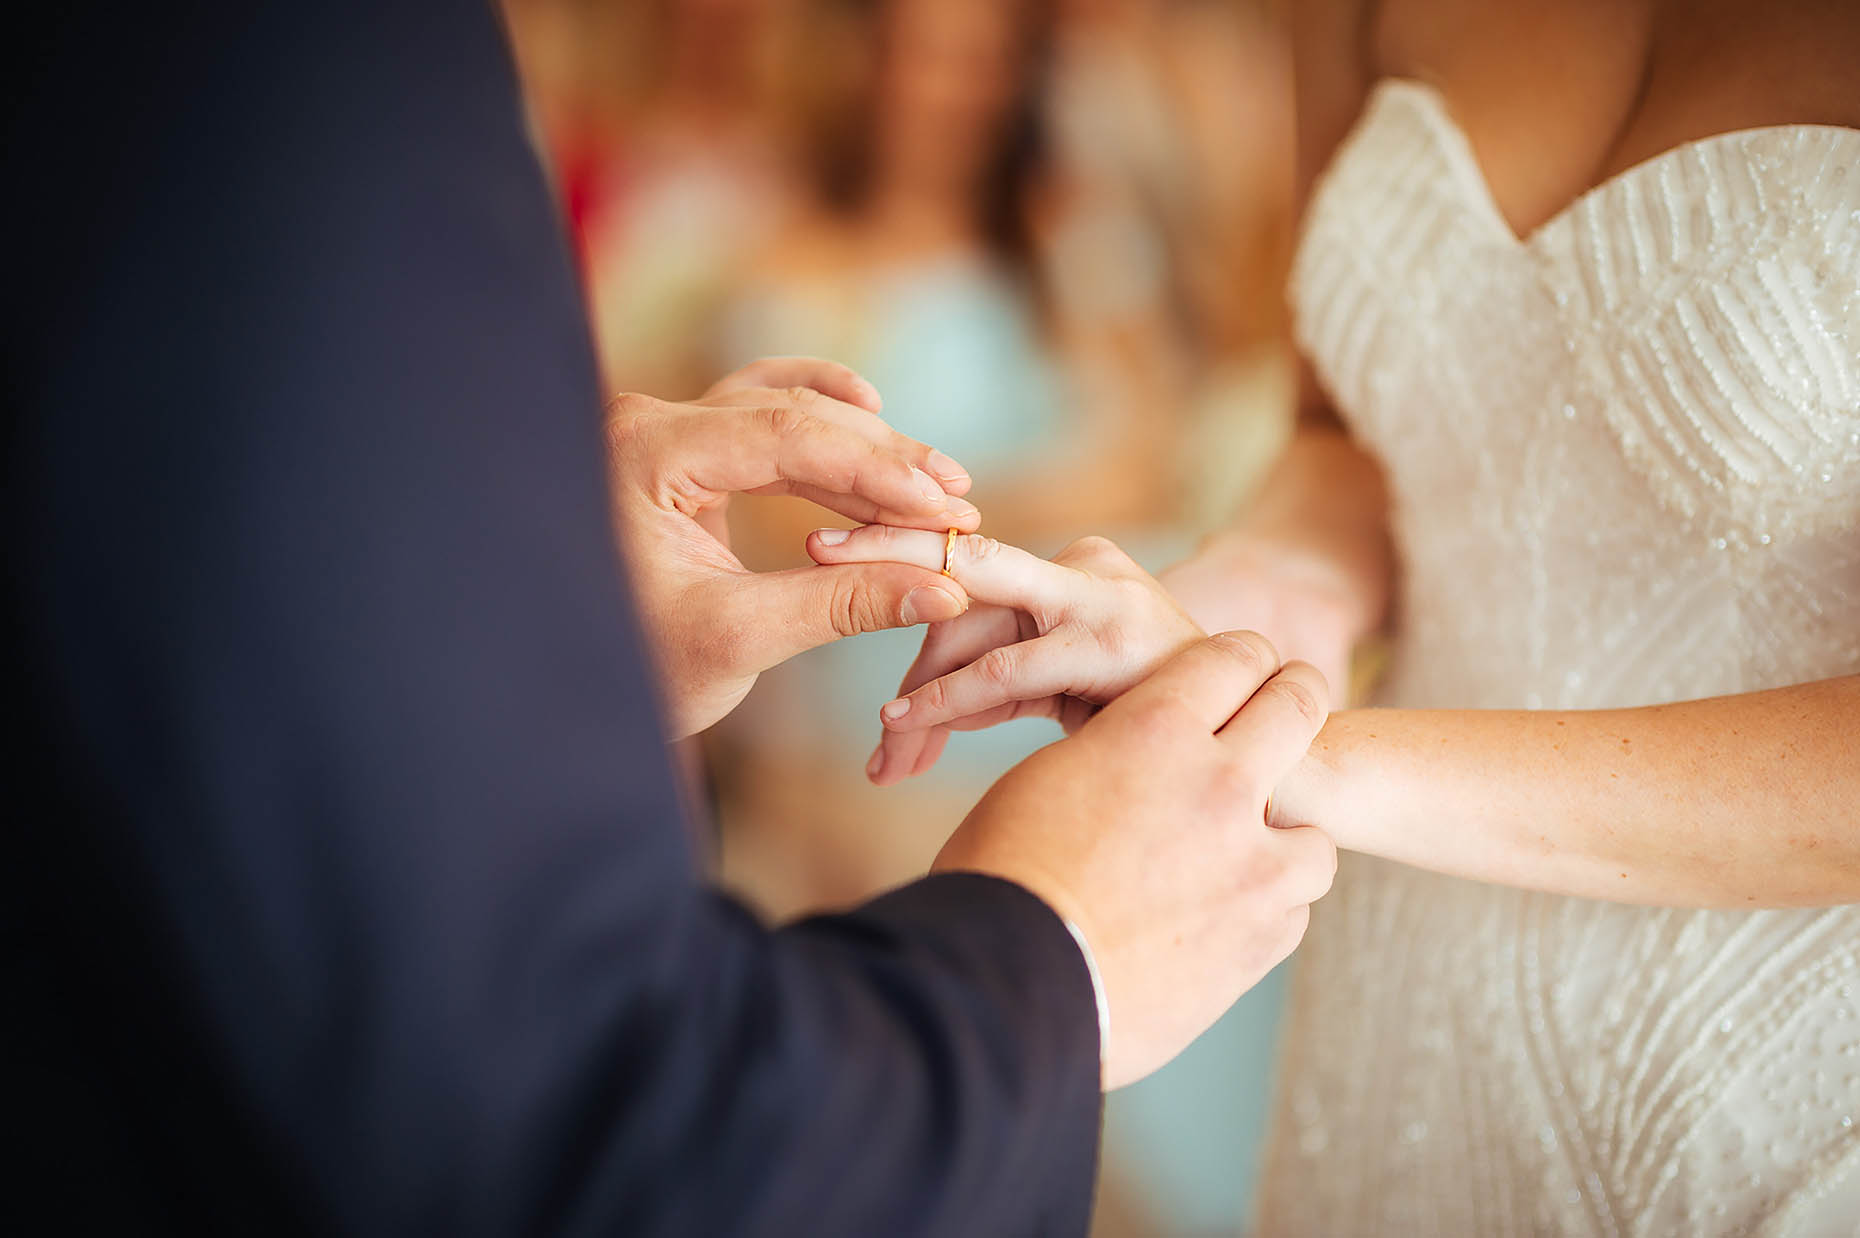 groom-ring-bride-finger-wedding-ceremony-axnoller-house-dorset-19